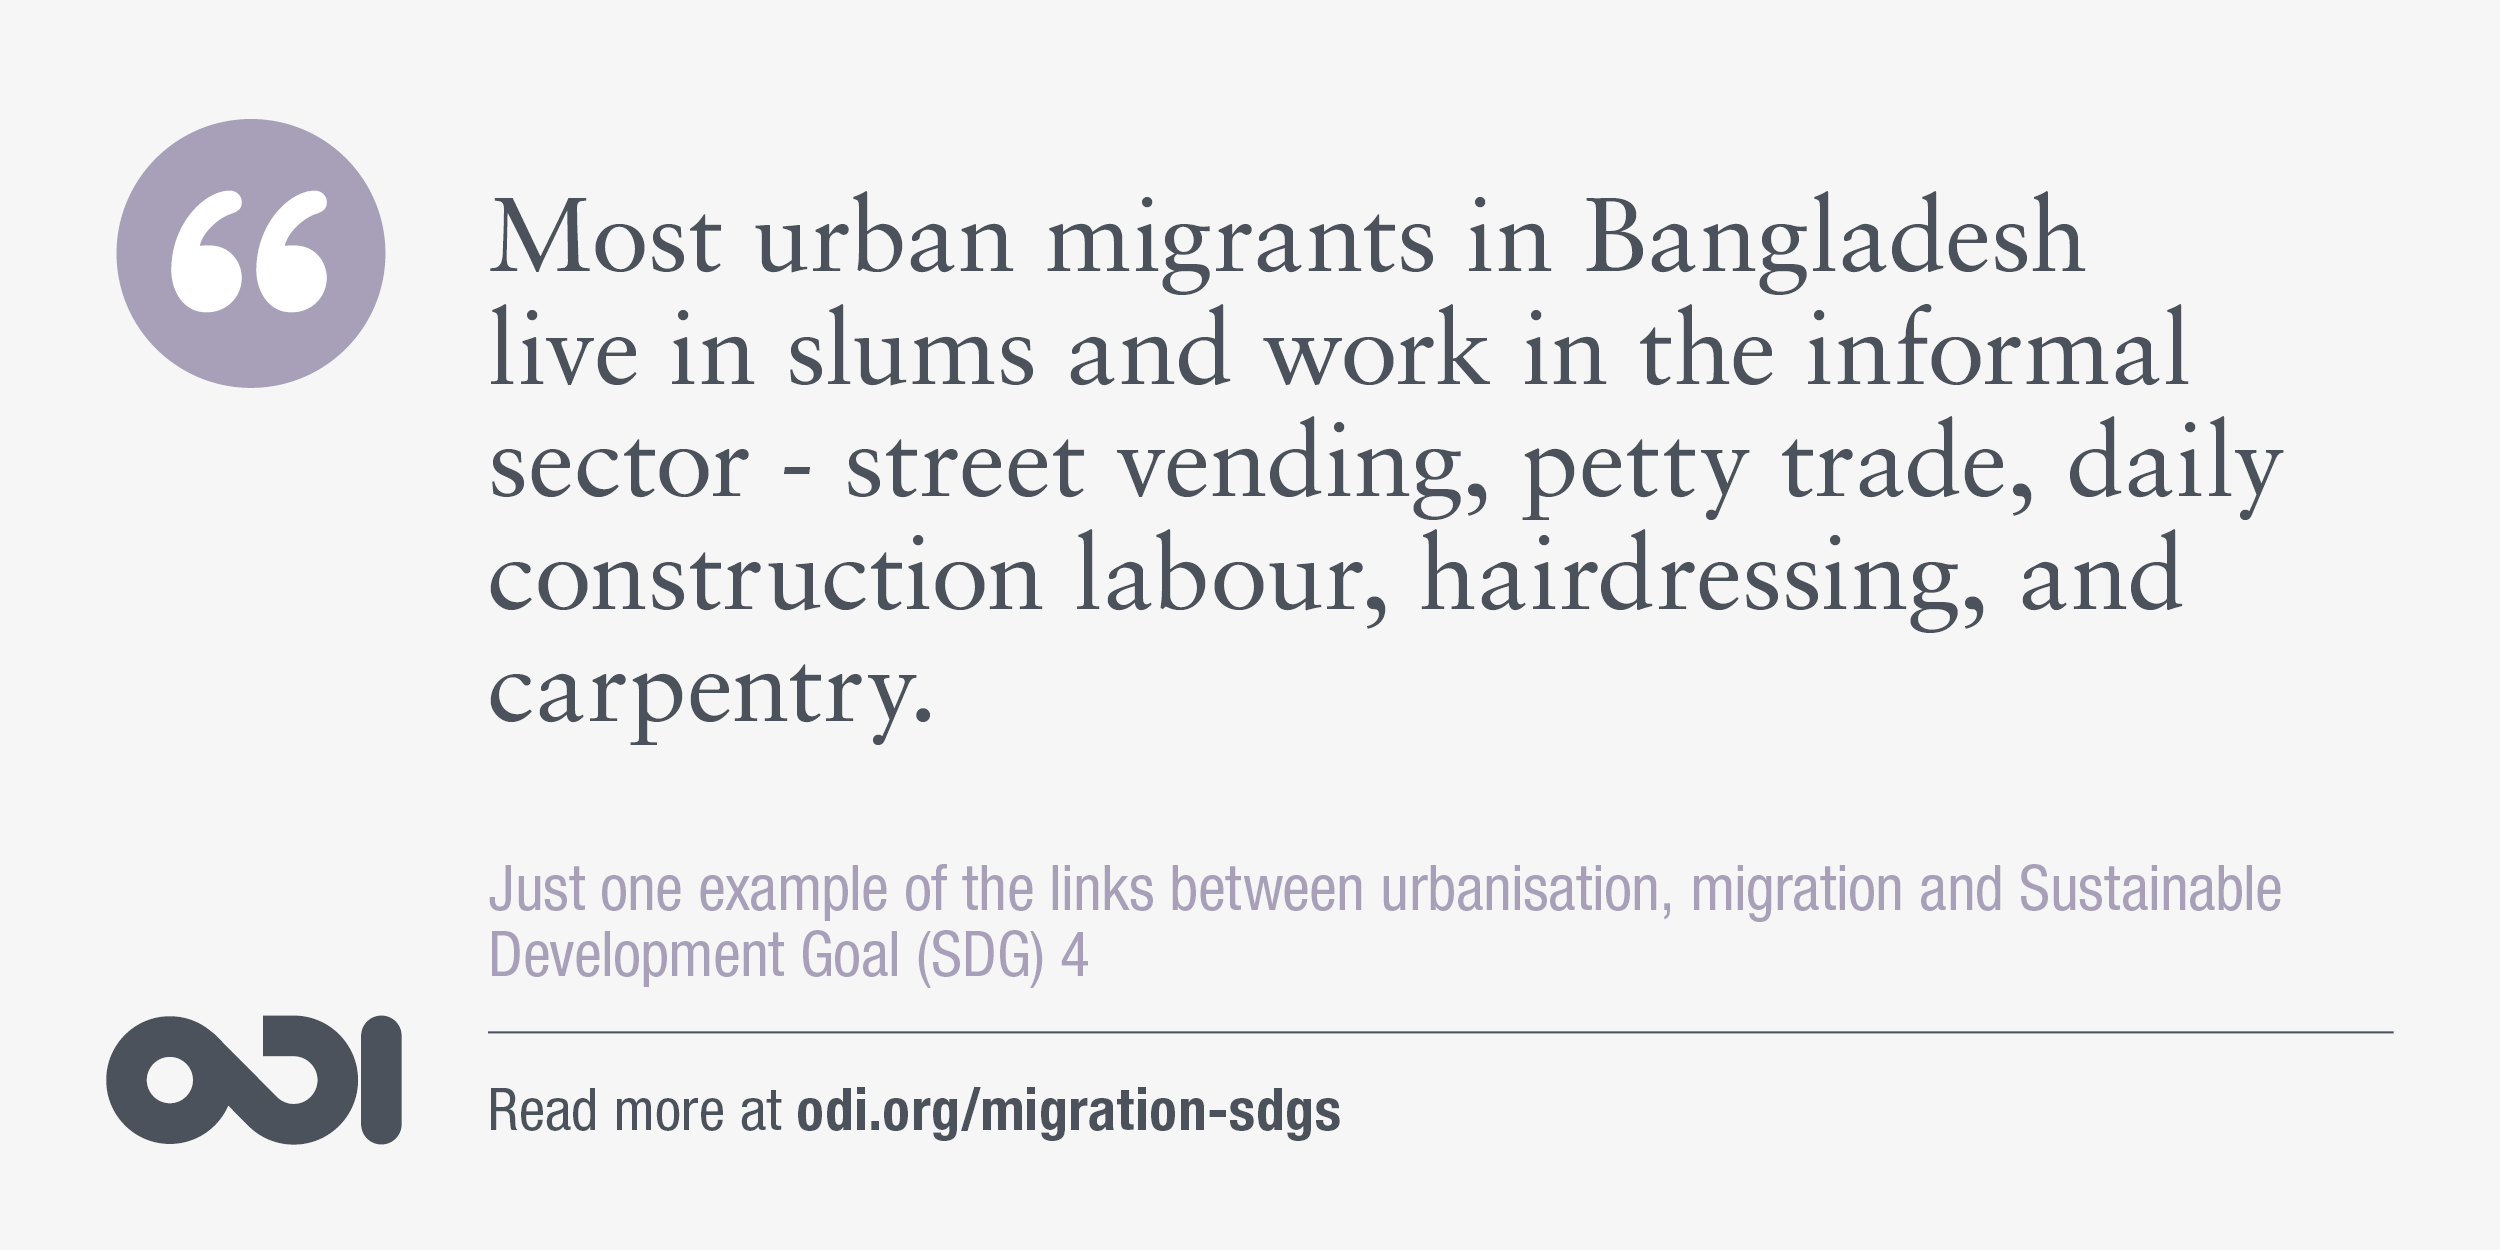 The links between urbanisation, migration and SDG 4.